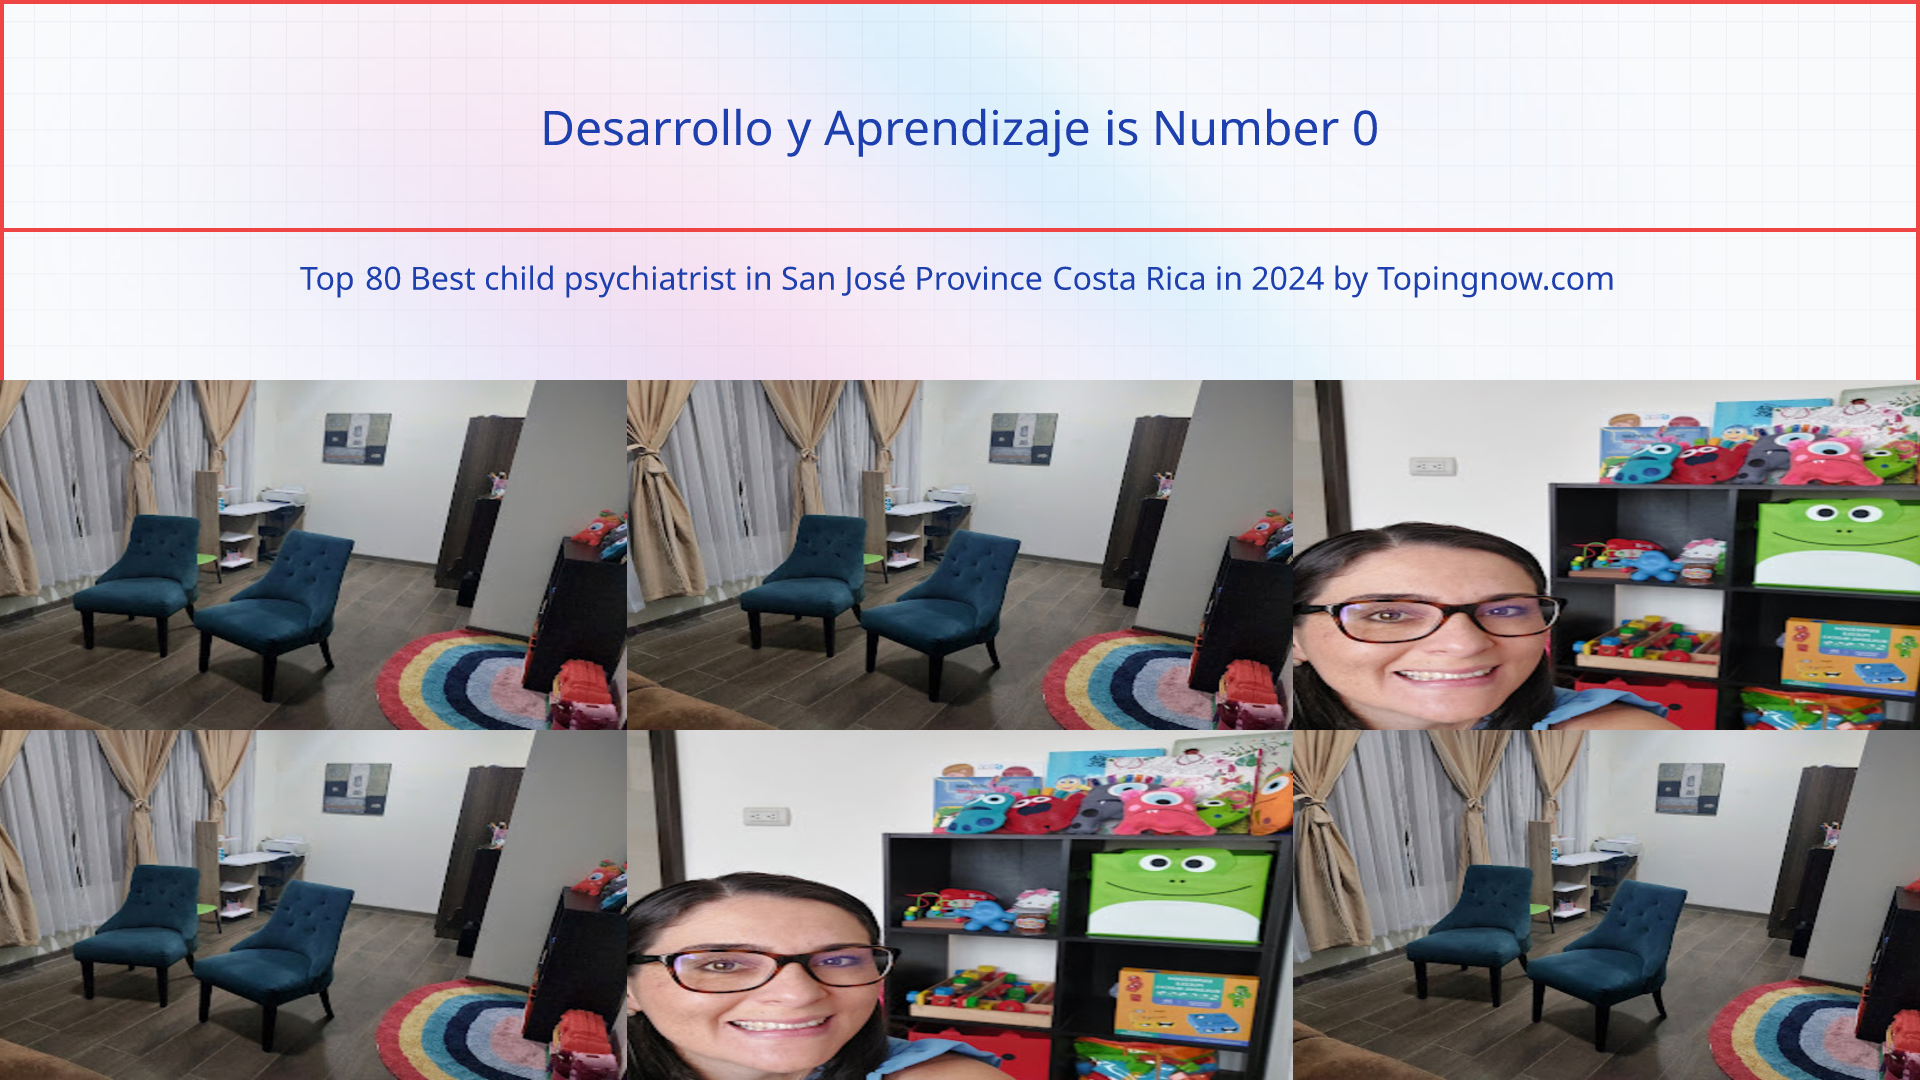 Desarrollo y Aprendizaje: Top 80 Best child psychiatrist in San José Province Costa Rica in 2024